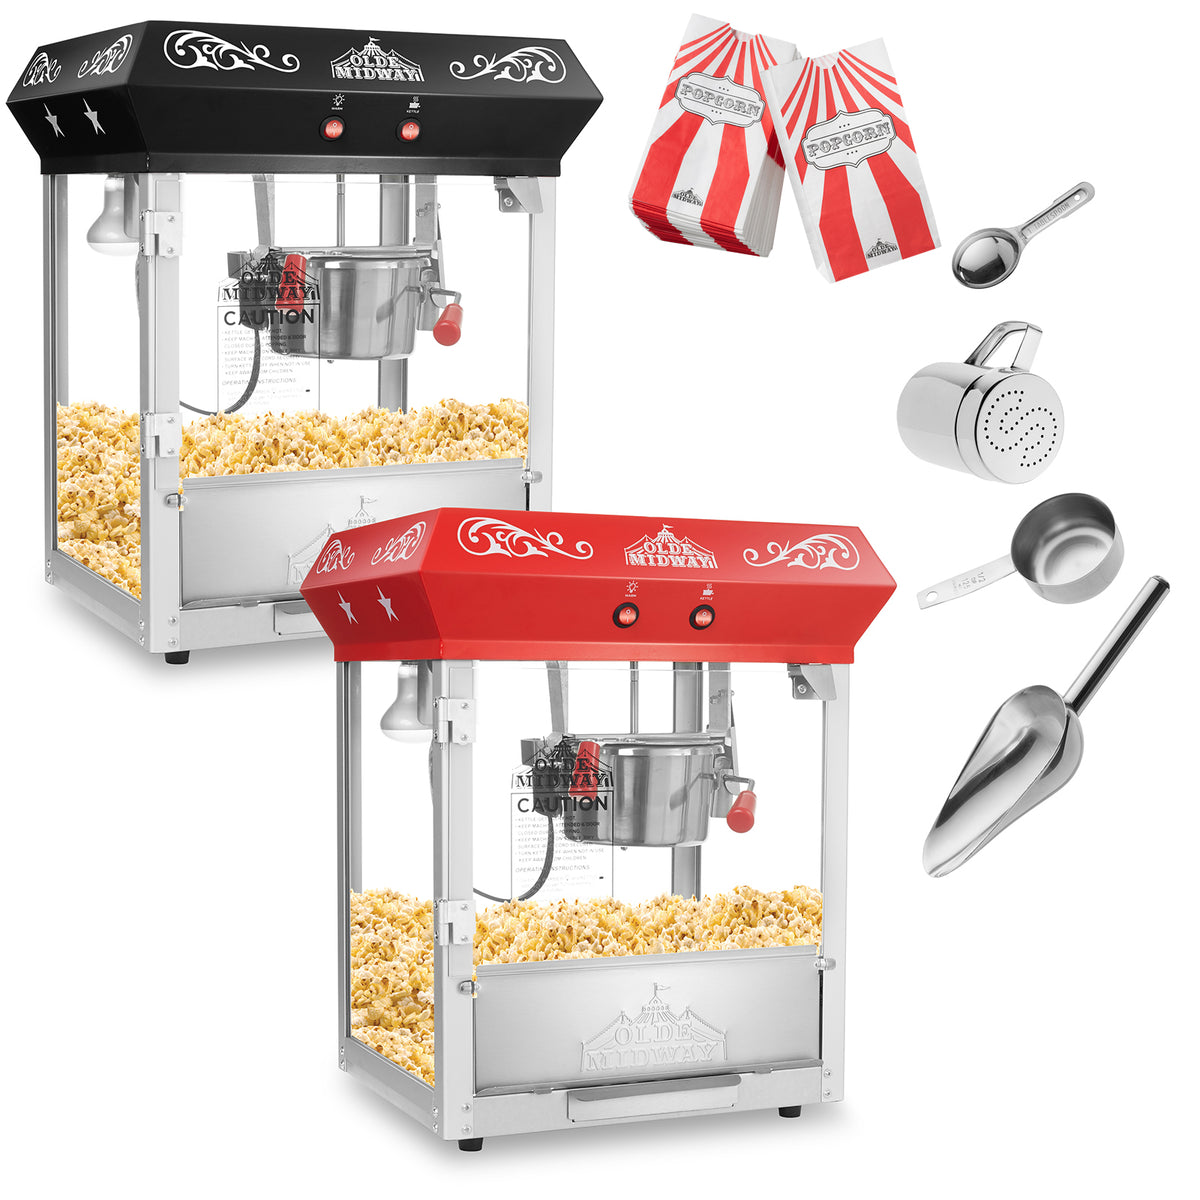 Vintage Popcorn Machine with 10 oz. Kettle, Black - Olde Midway